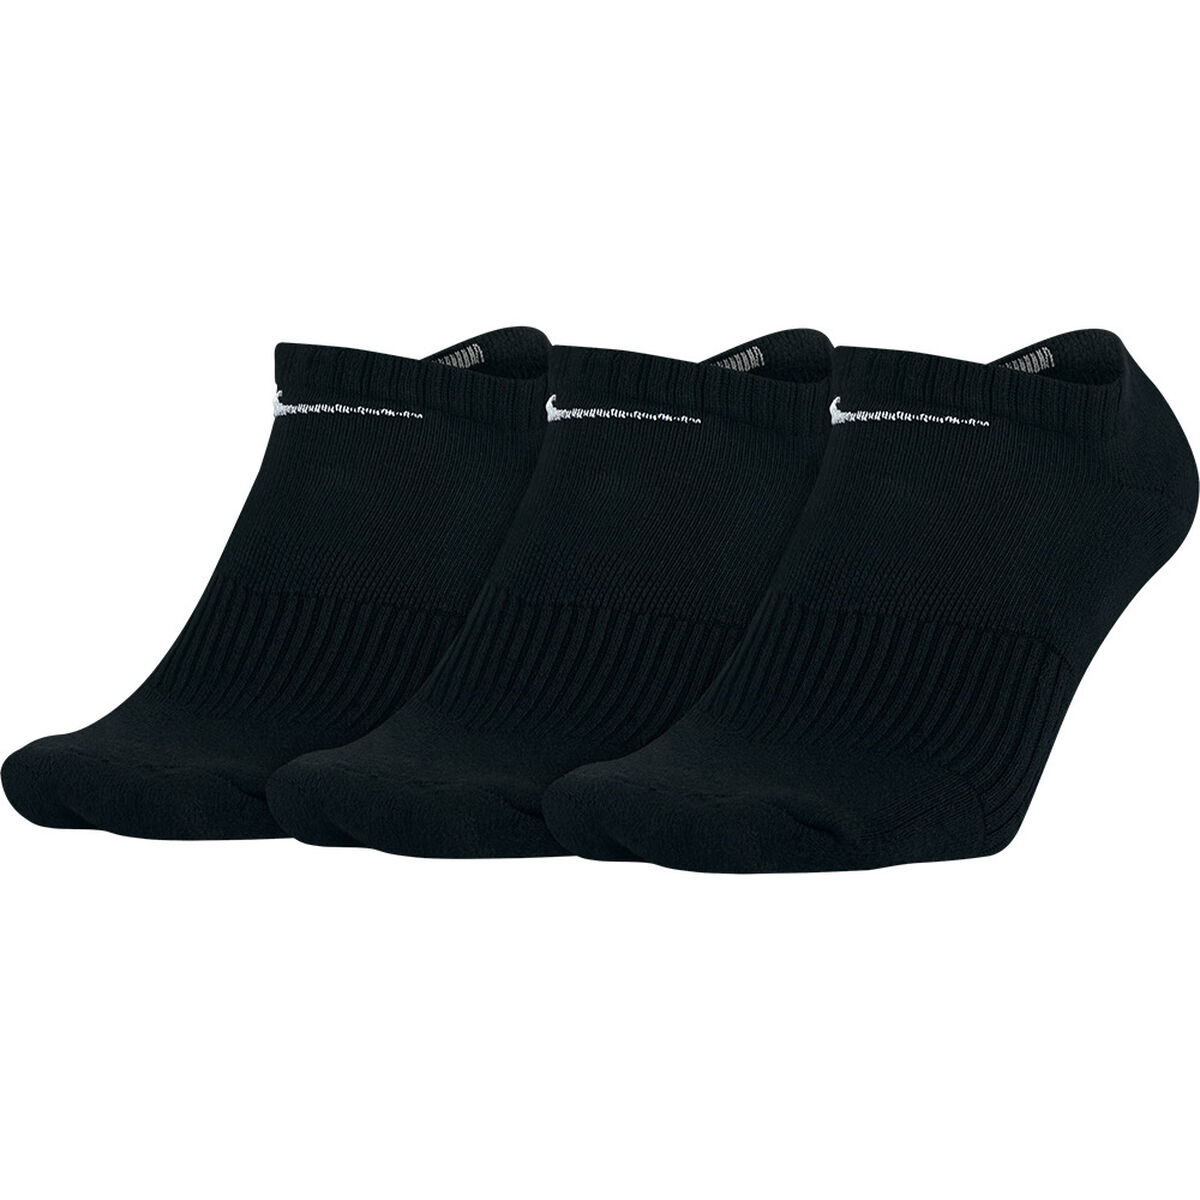 Calcetas Nike Performance Cushion No-Show Training Sock 